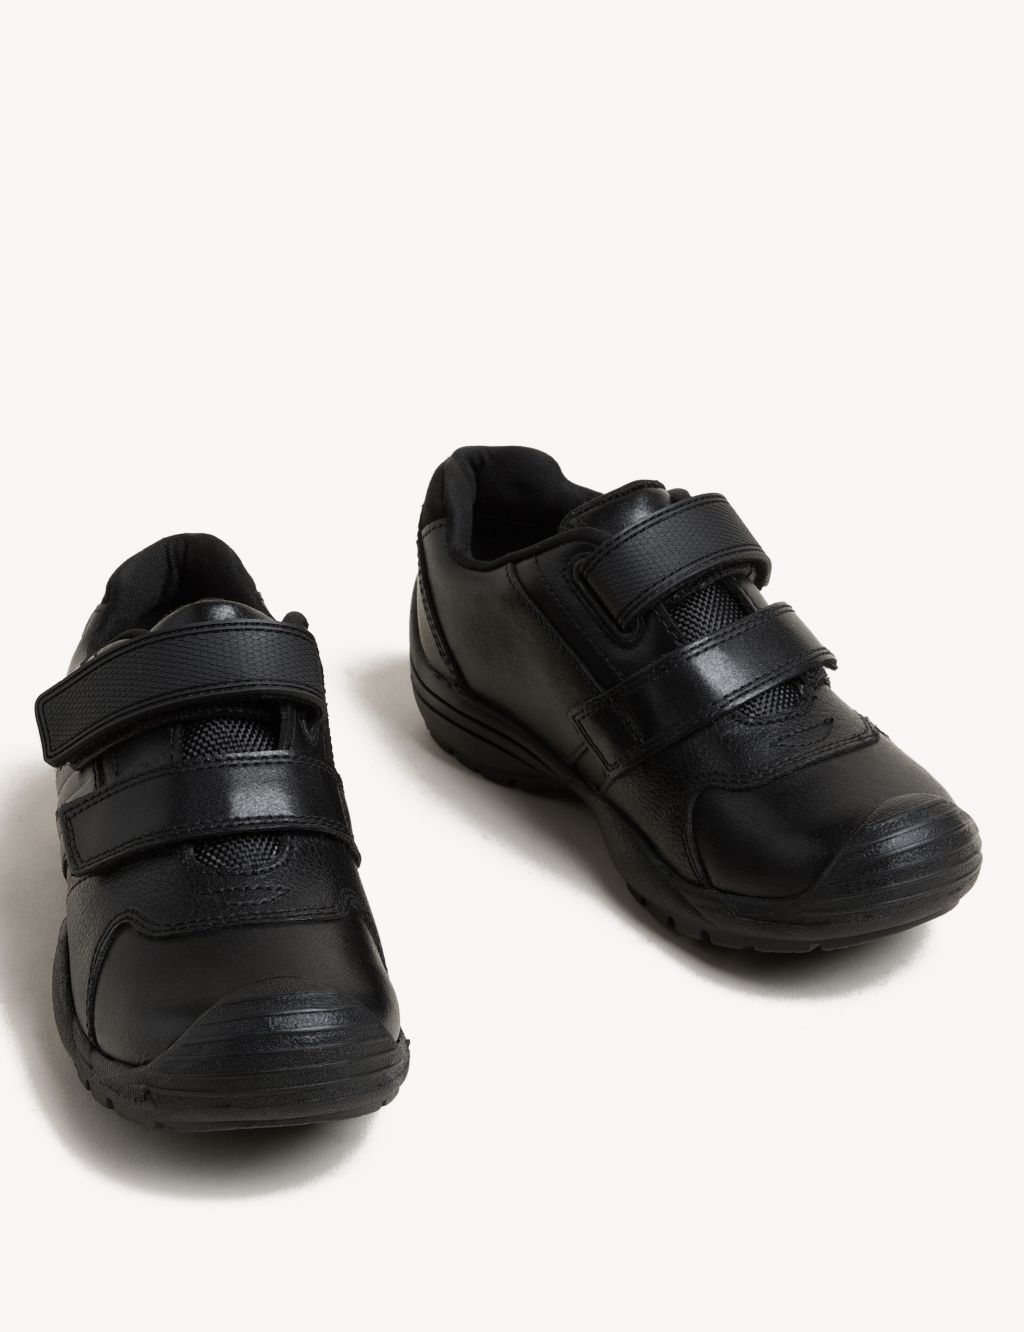 Kid’s Freshfeet™ Light-Up School Shoes (8 Small - 2 Large) image 2